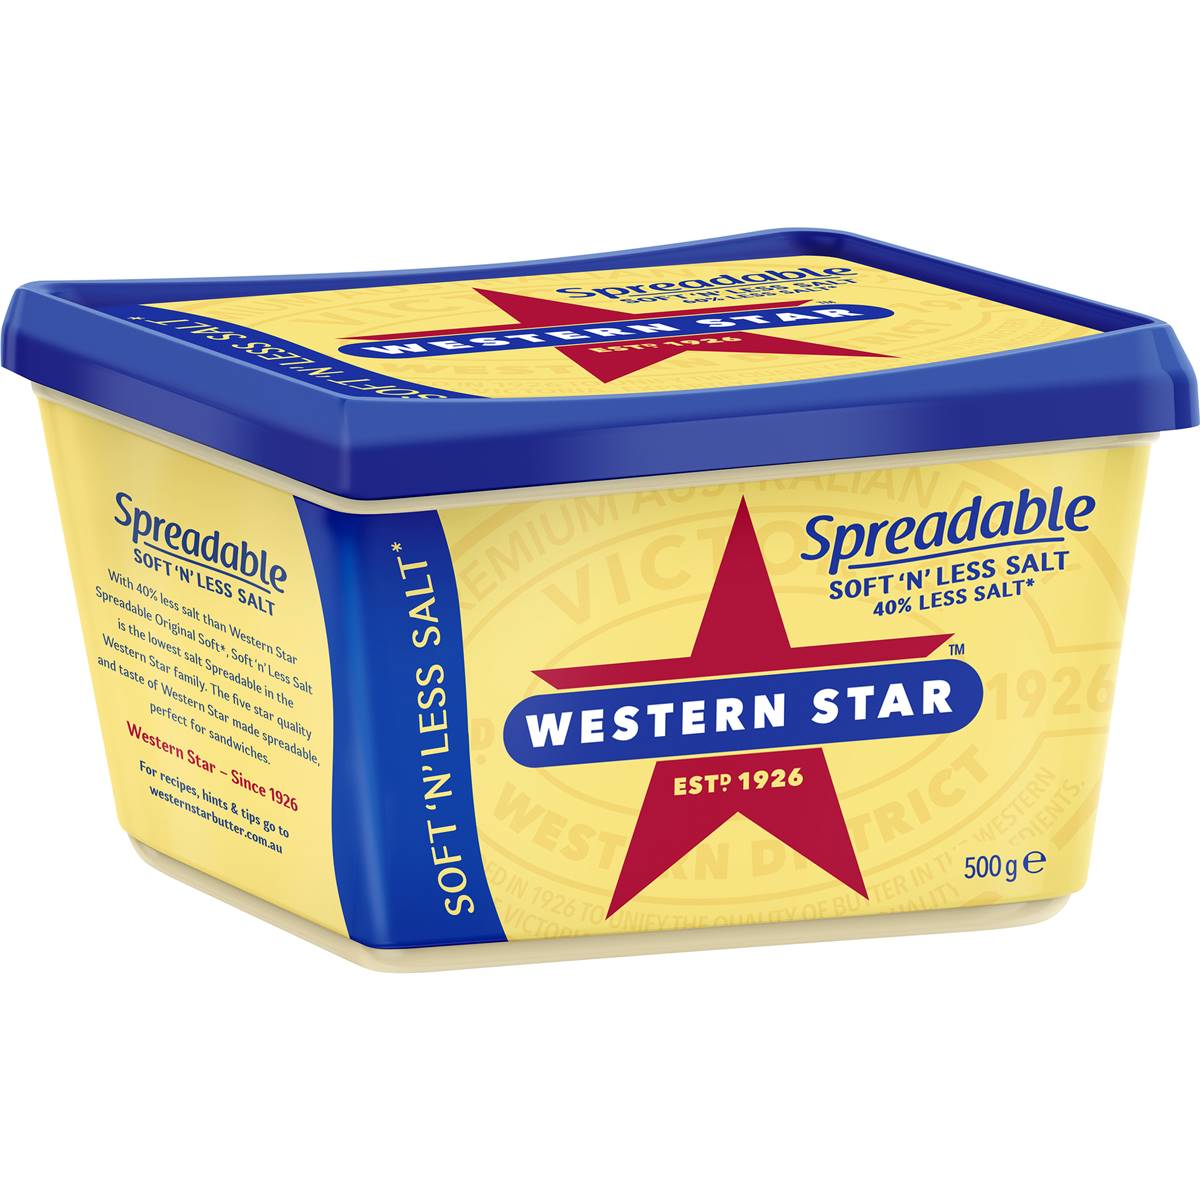 Calories in Western Star Soft 'n' Less Salt Spreadable